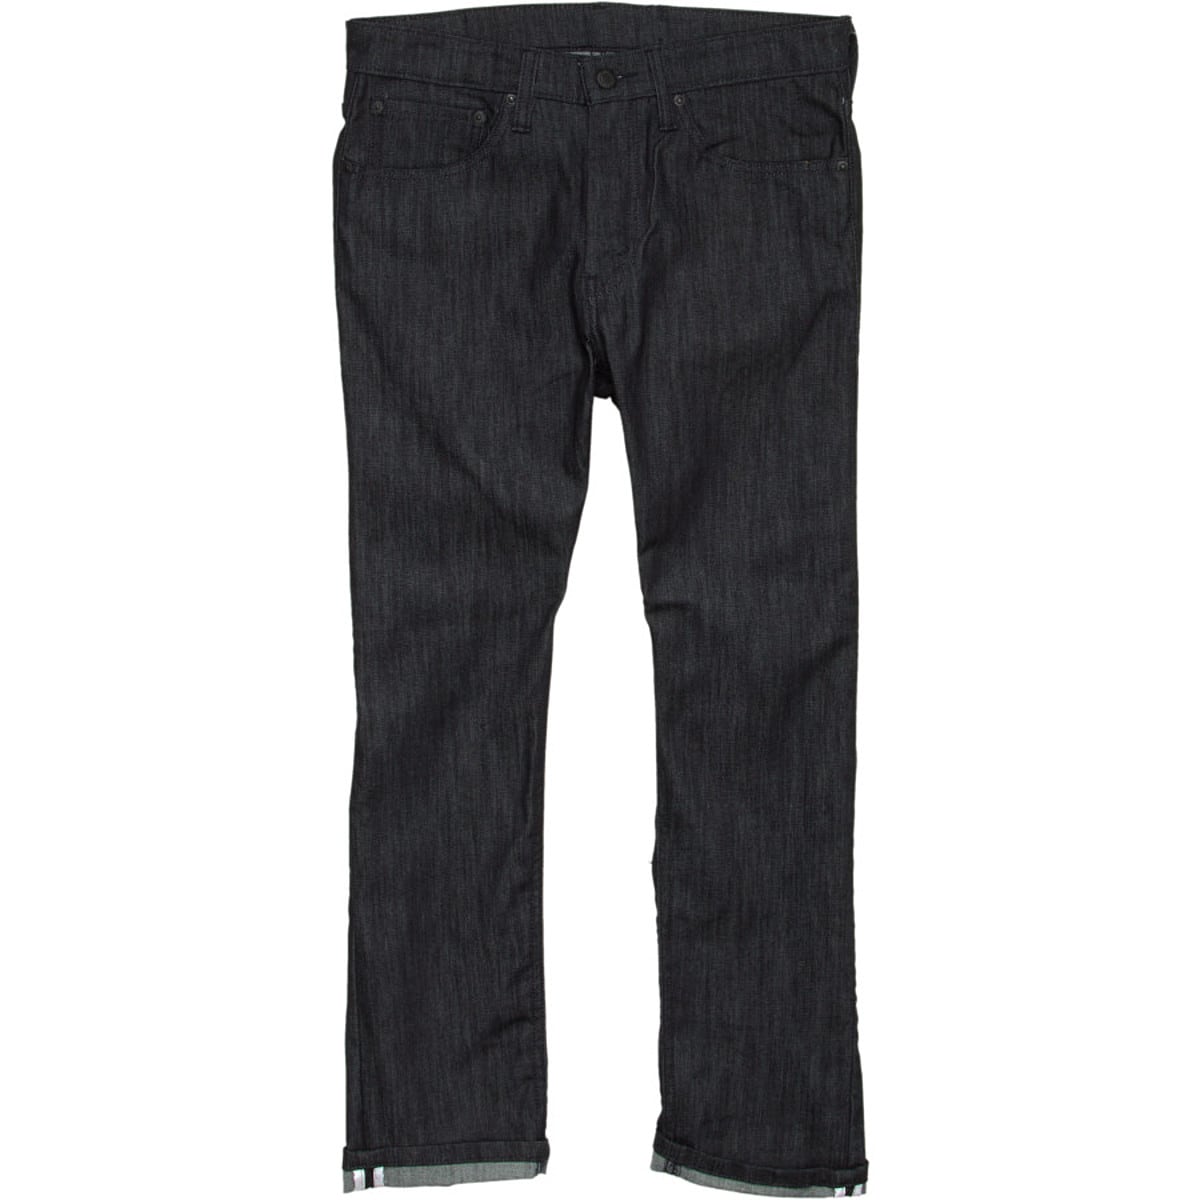 Levi's Commuter 504 5-Pocket Pants - Clothing